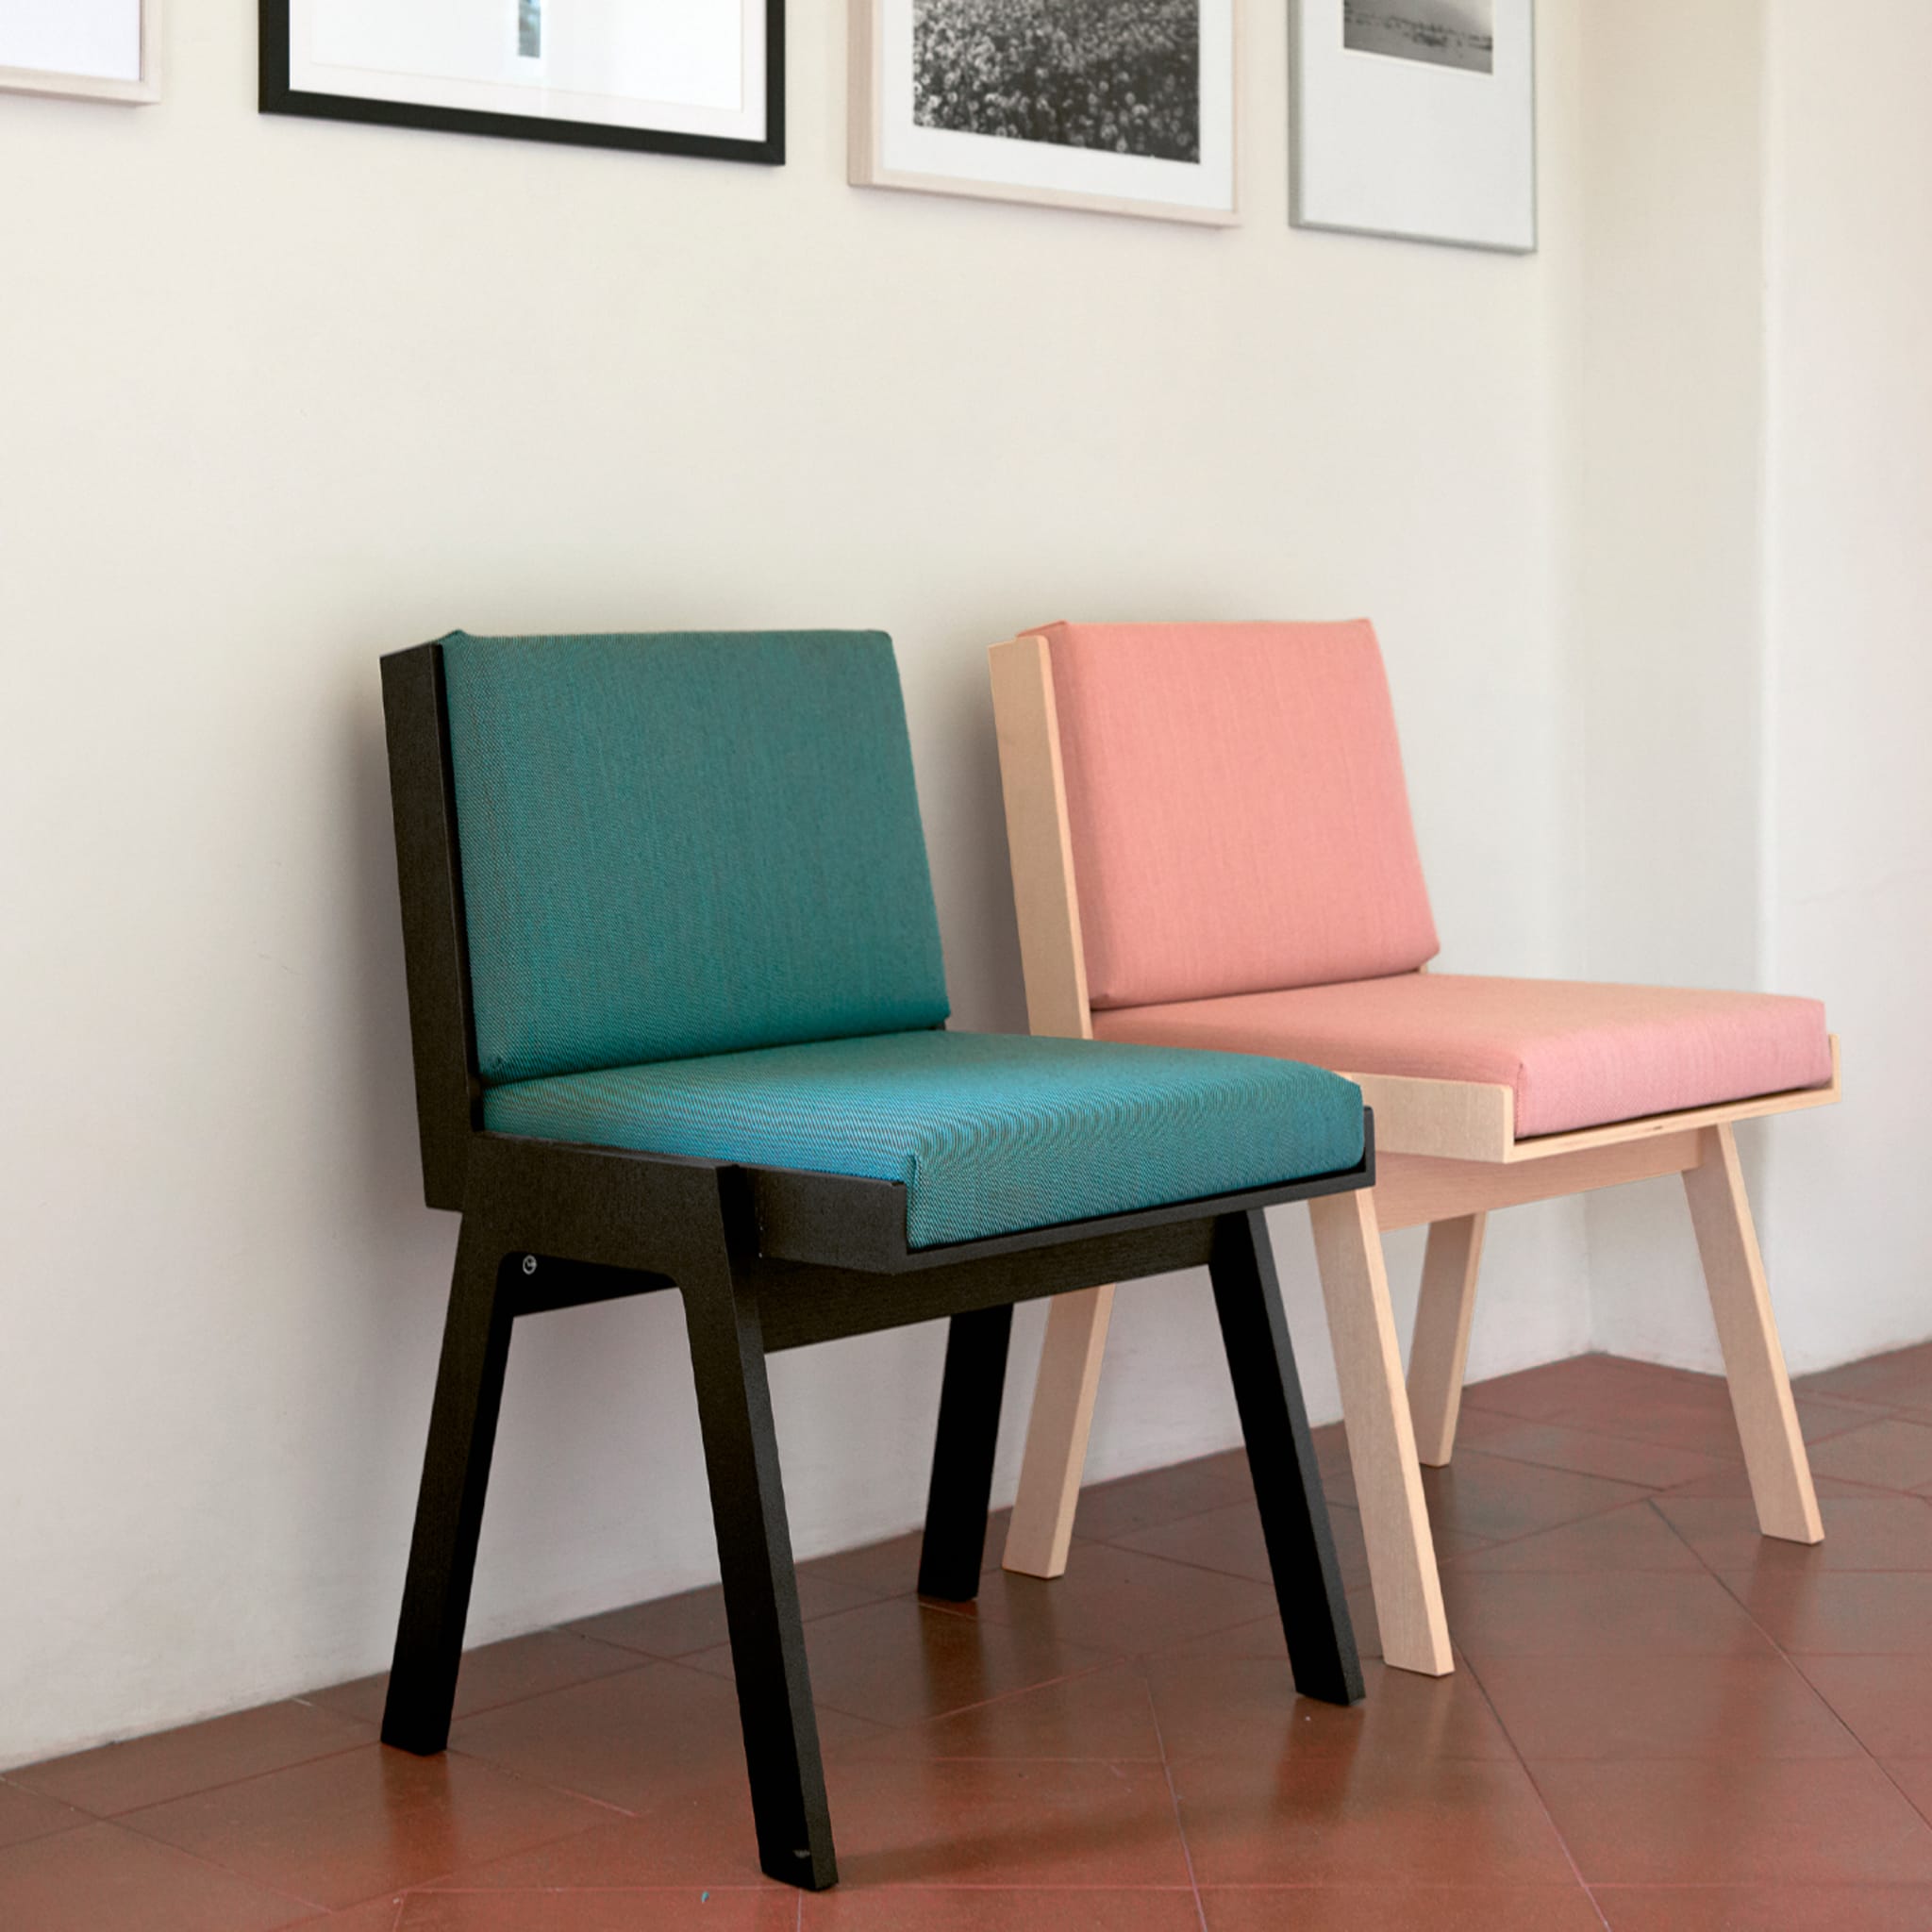 Club 44 Pink Chair by Angelo Mangiarotti - Alternative view 1